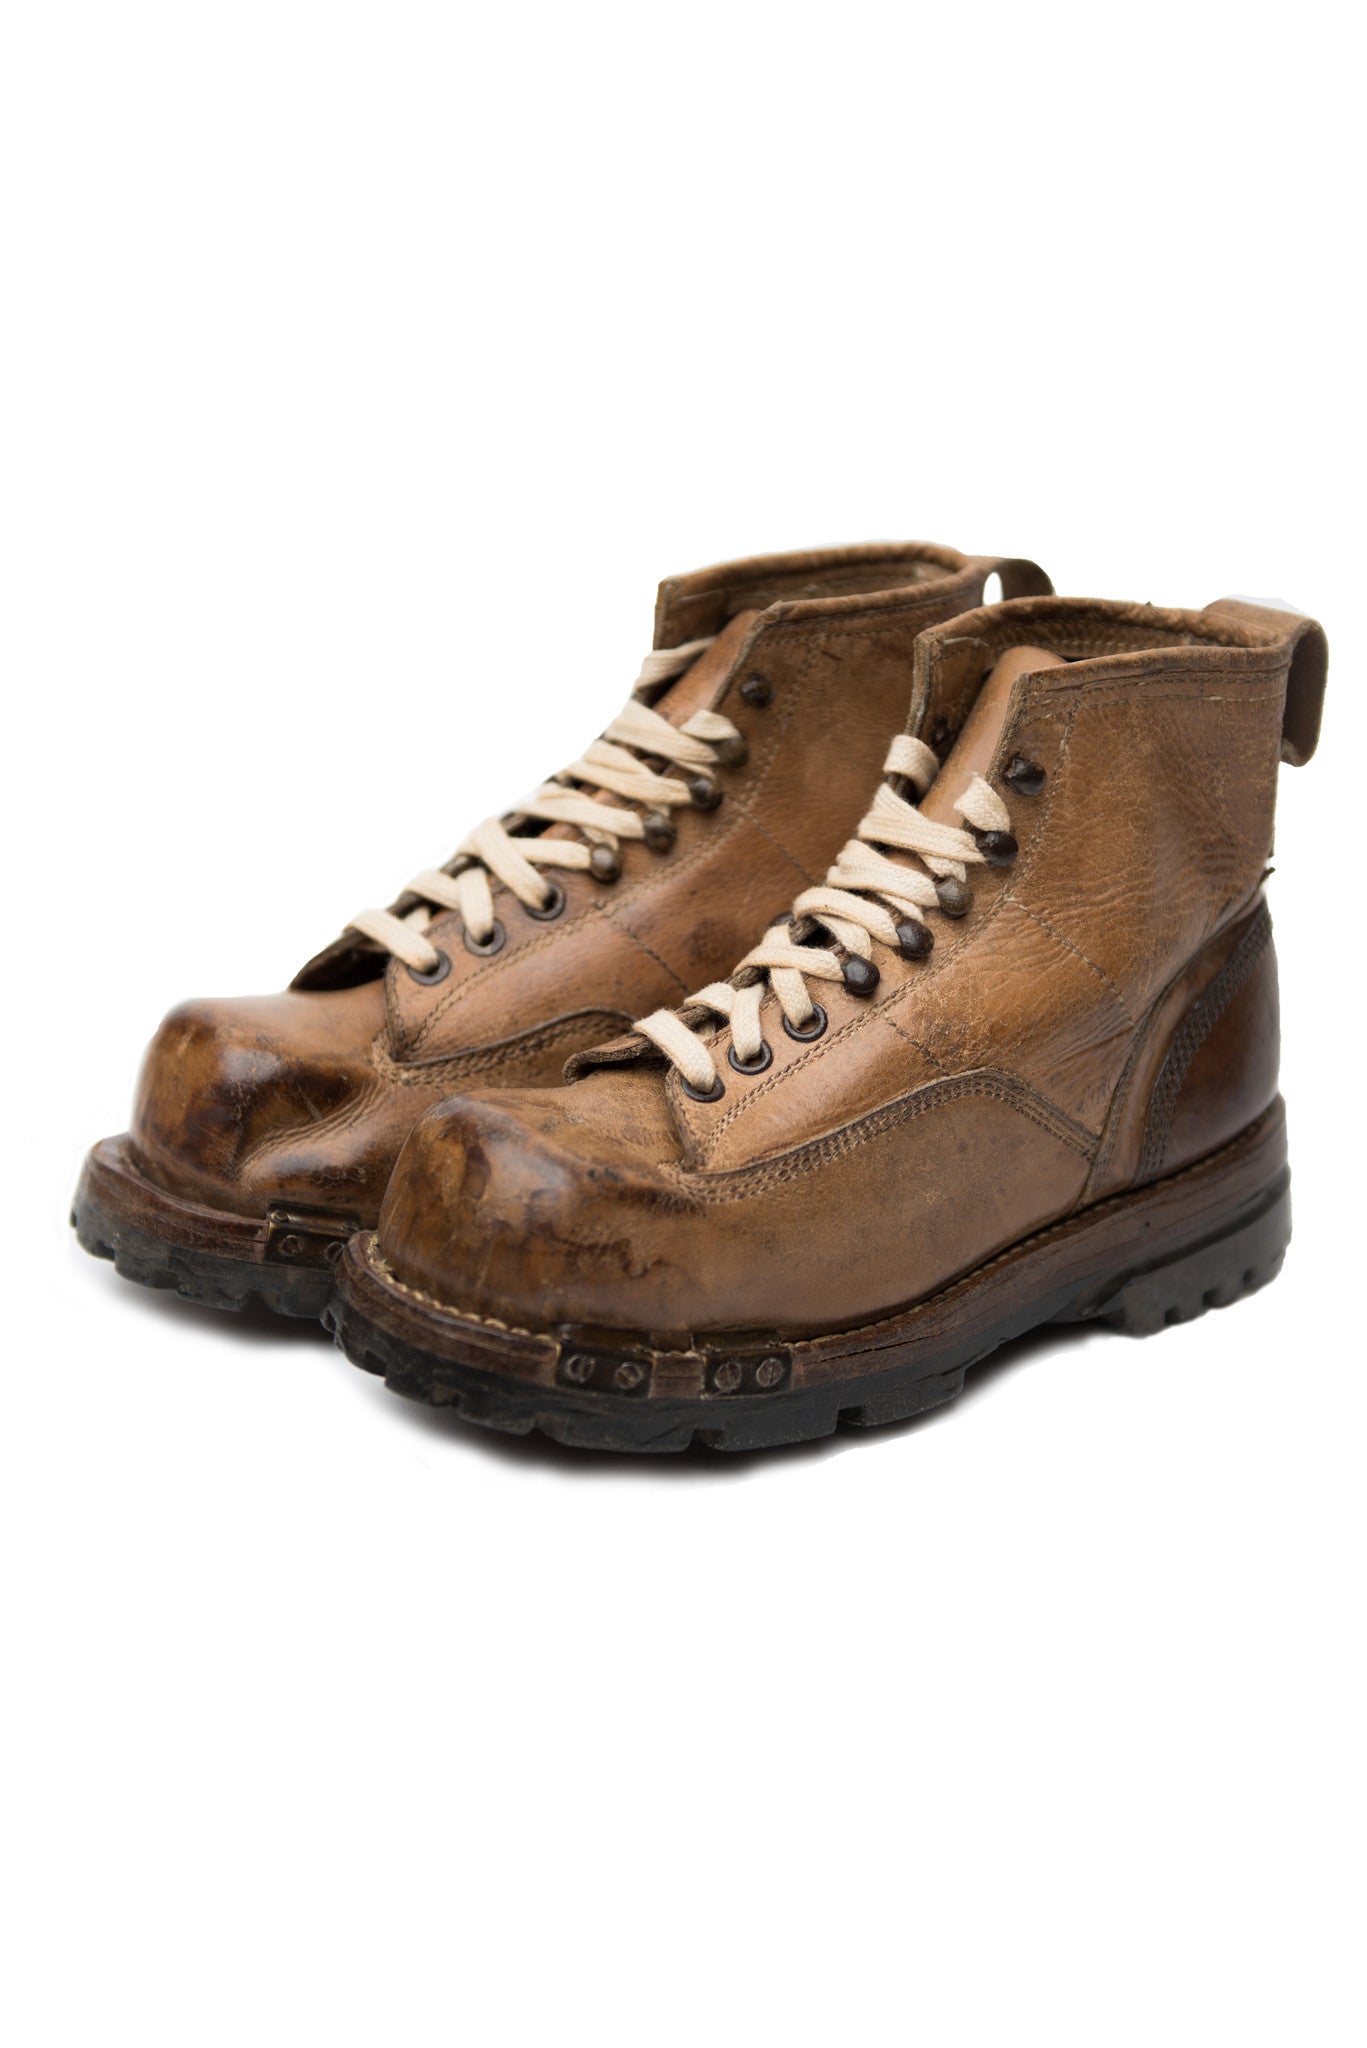 Vintage Mountain Division Ski Boots - VintageWinter